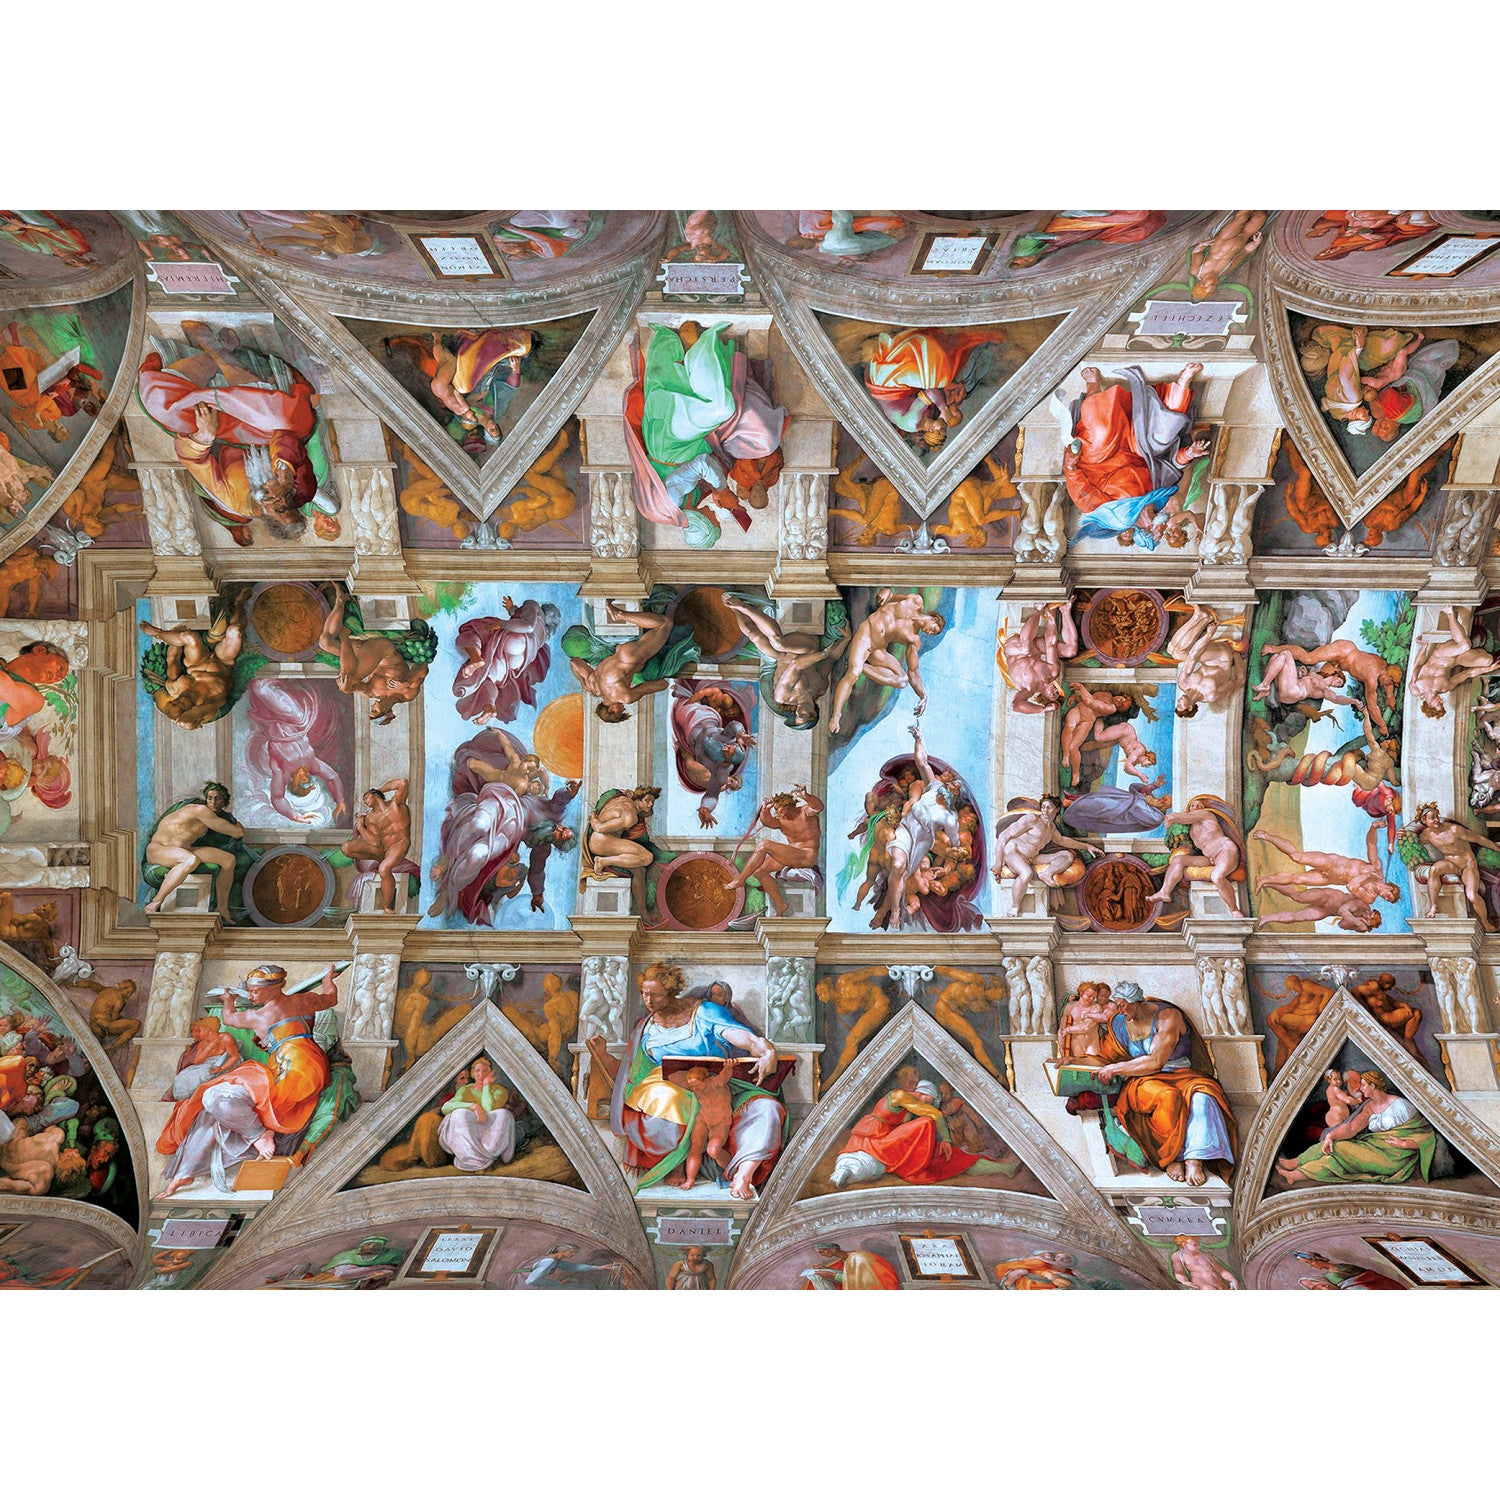 Sistine Chapel Ceiling Meowsterpiece of Western Art 2000 Piece